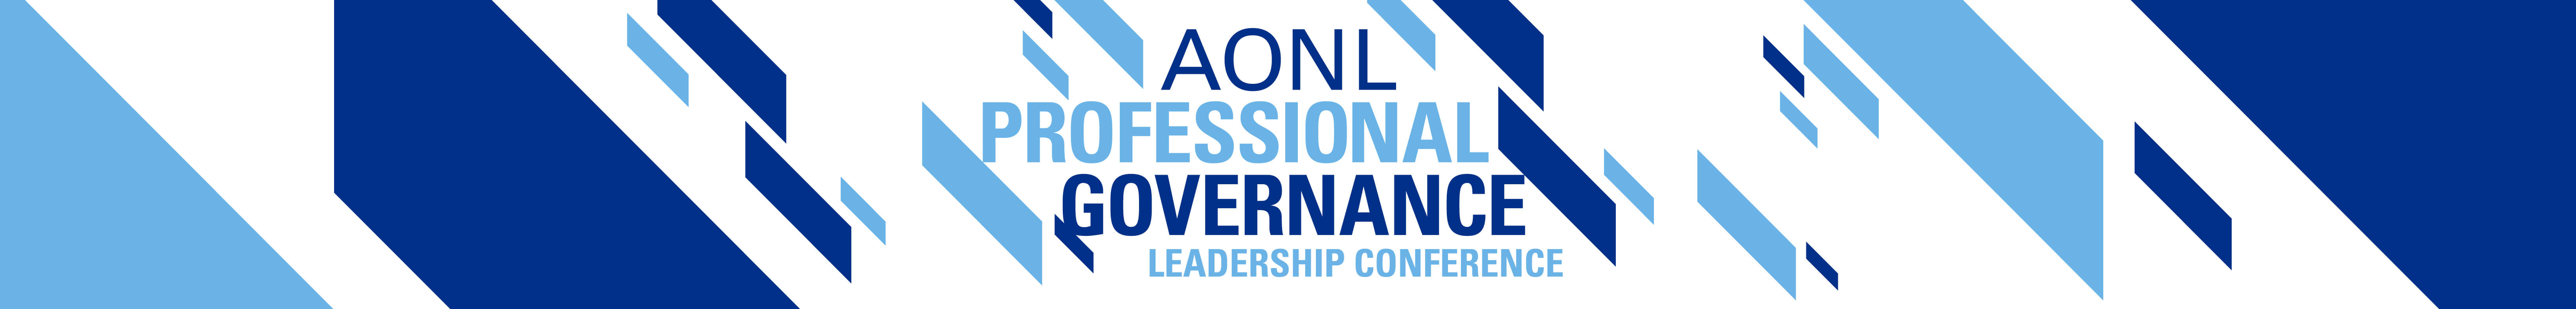 Professional Governance Banner